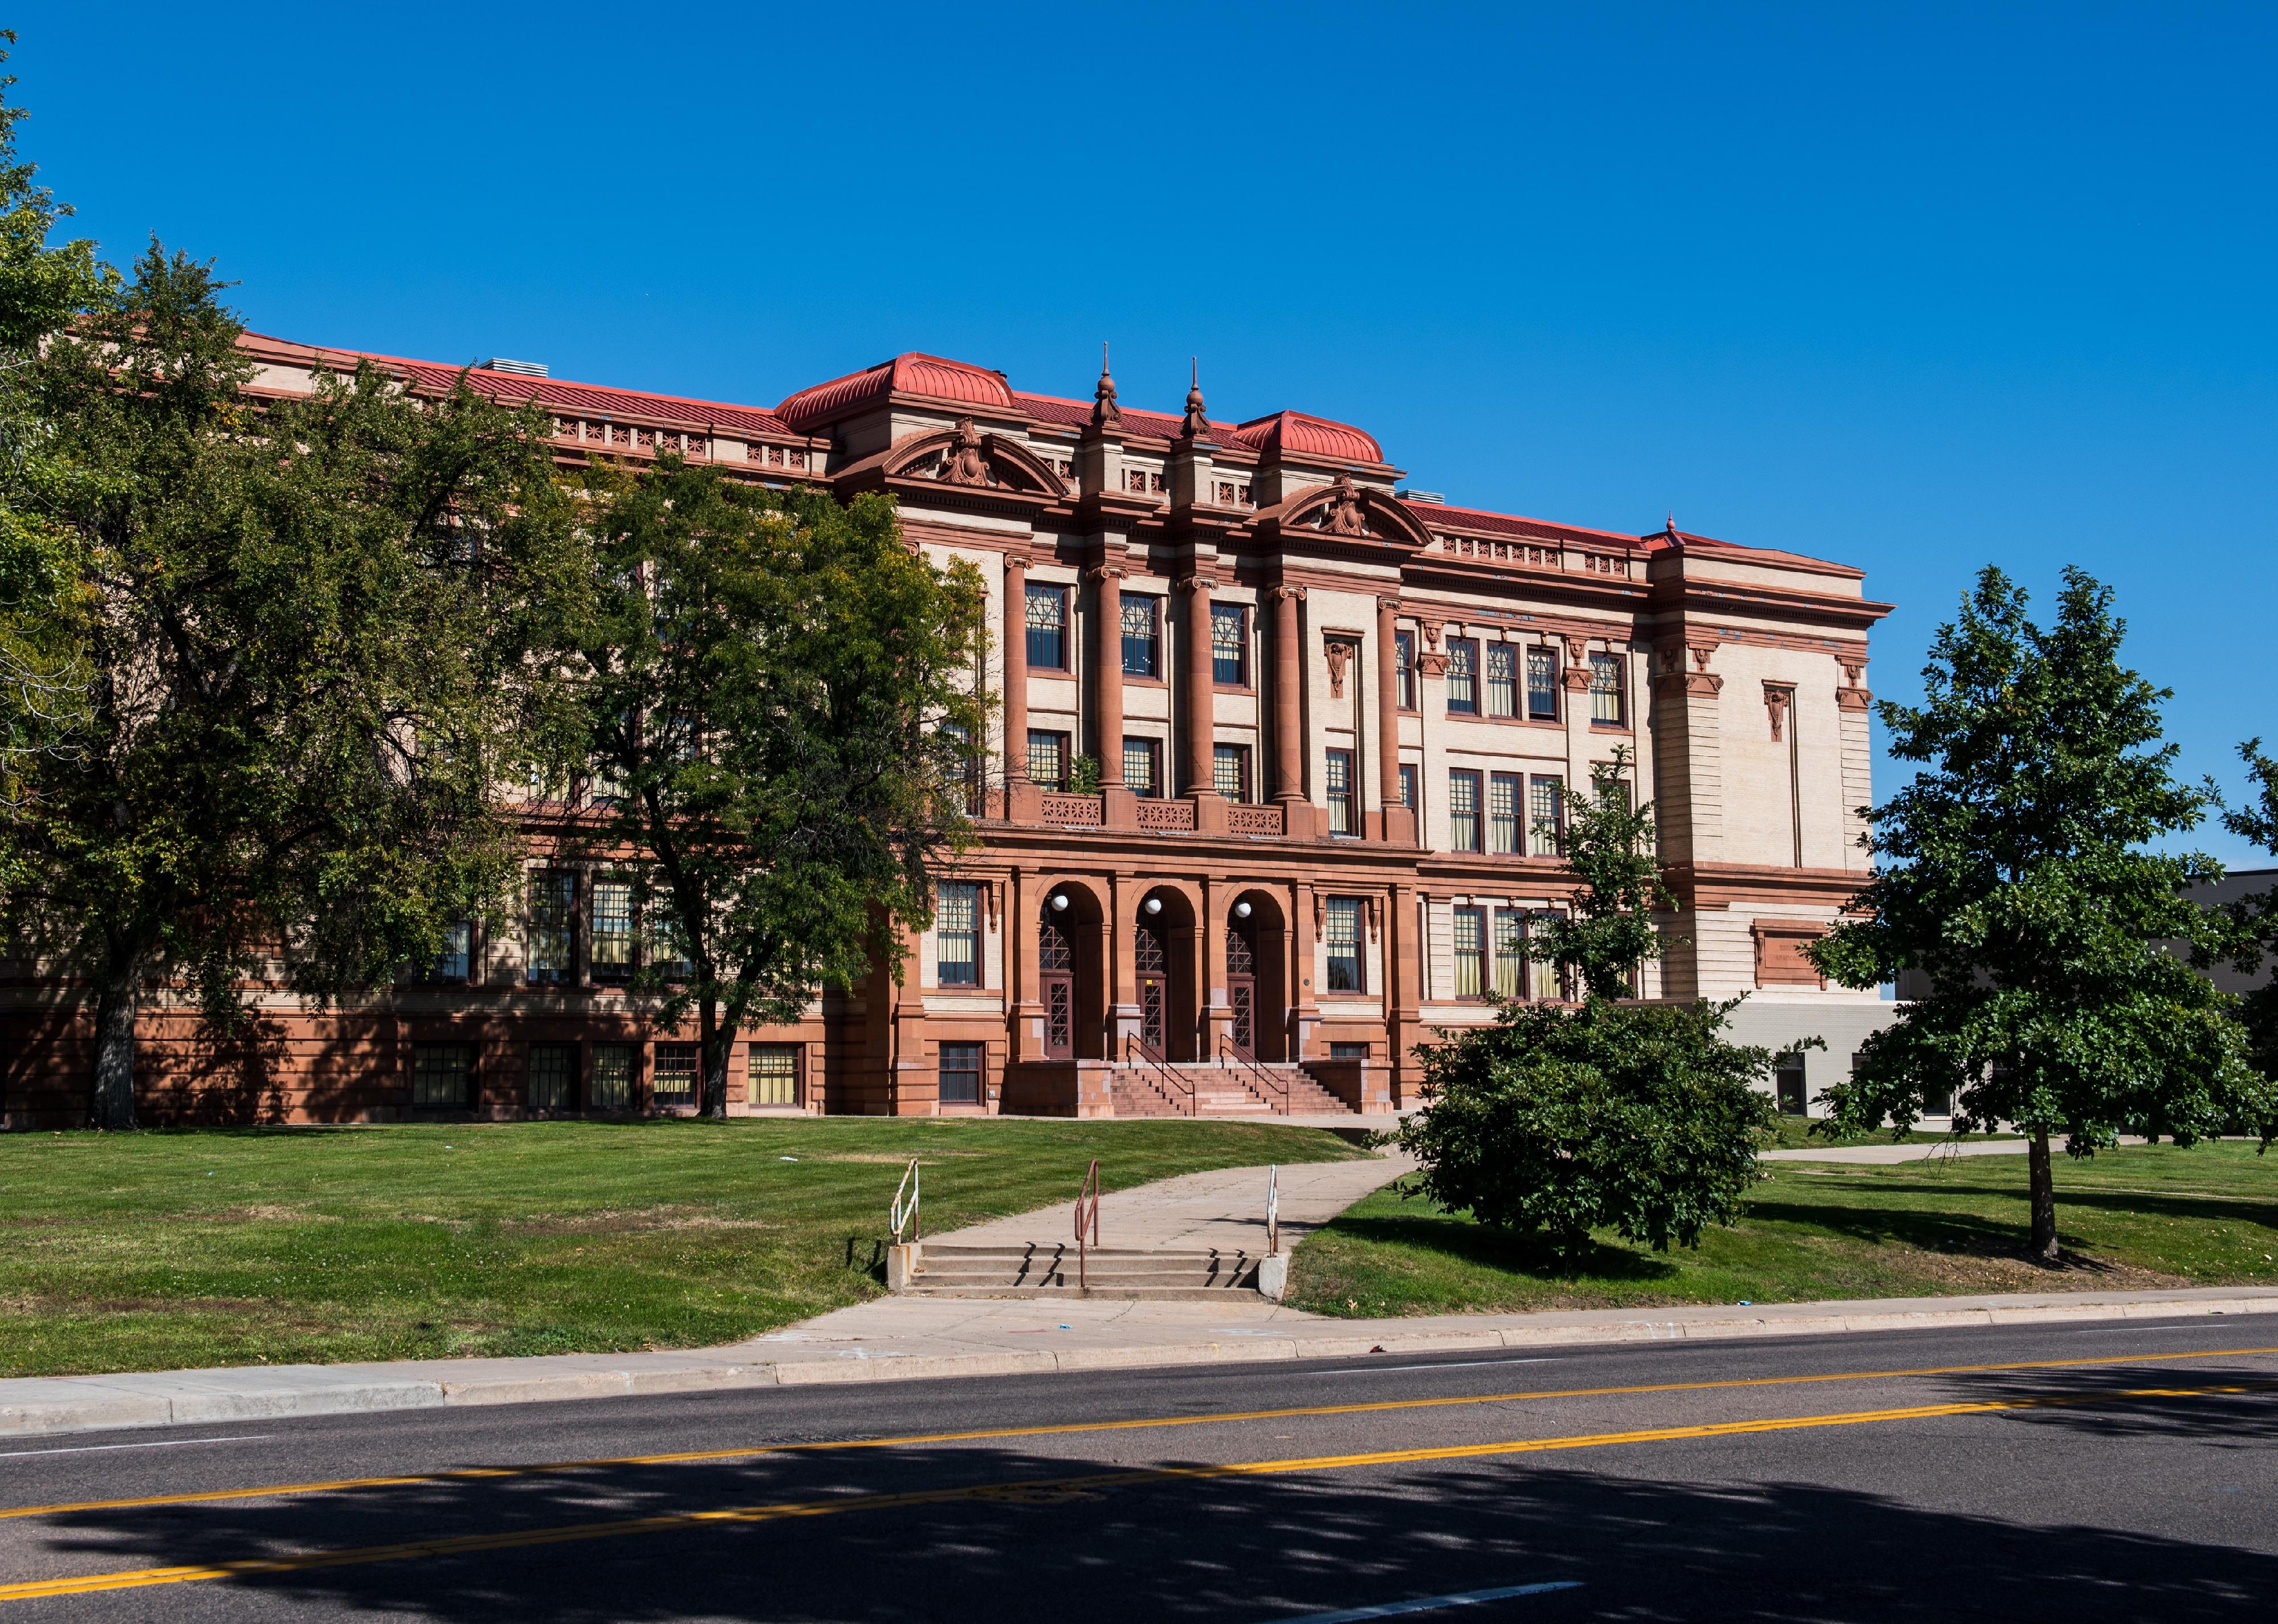 Denver's historic North High School